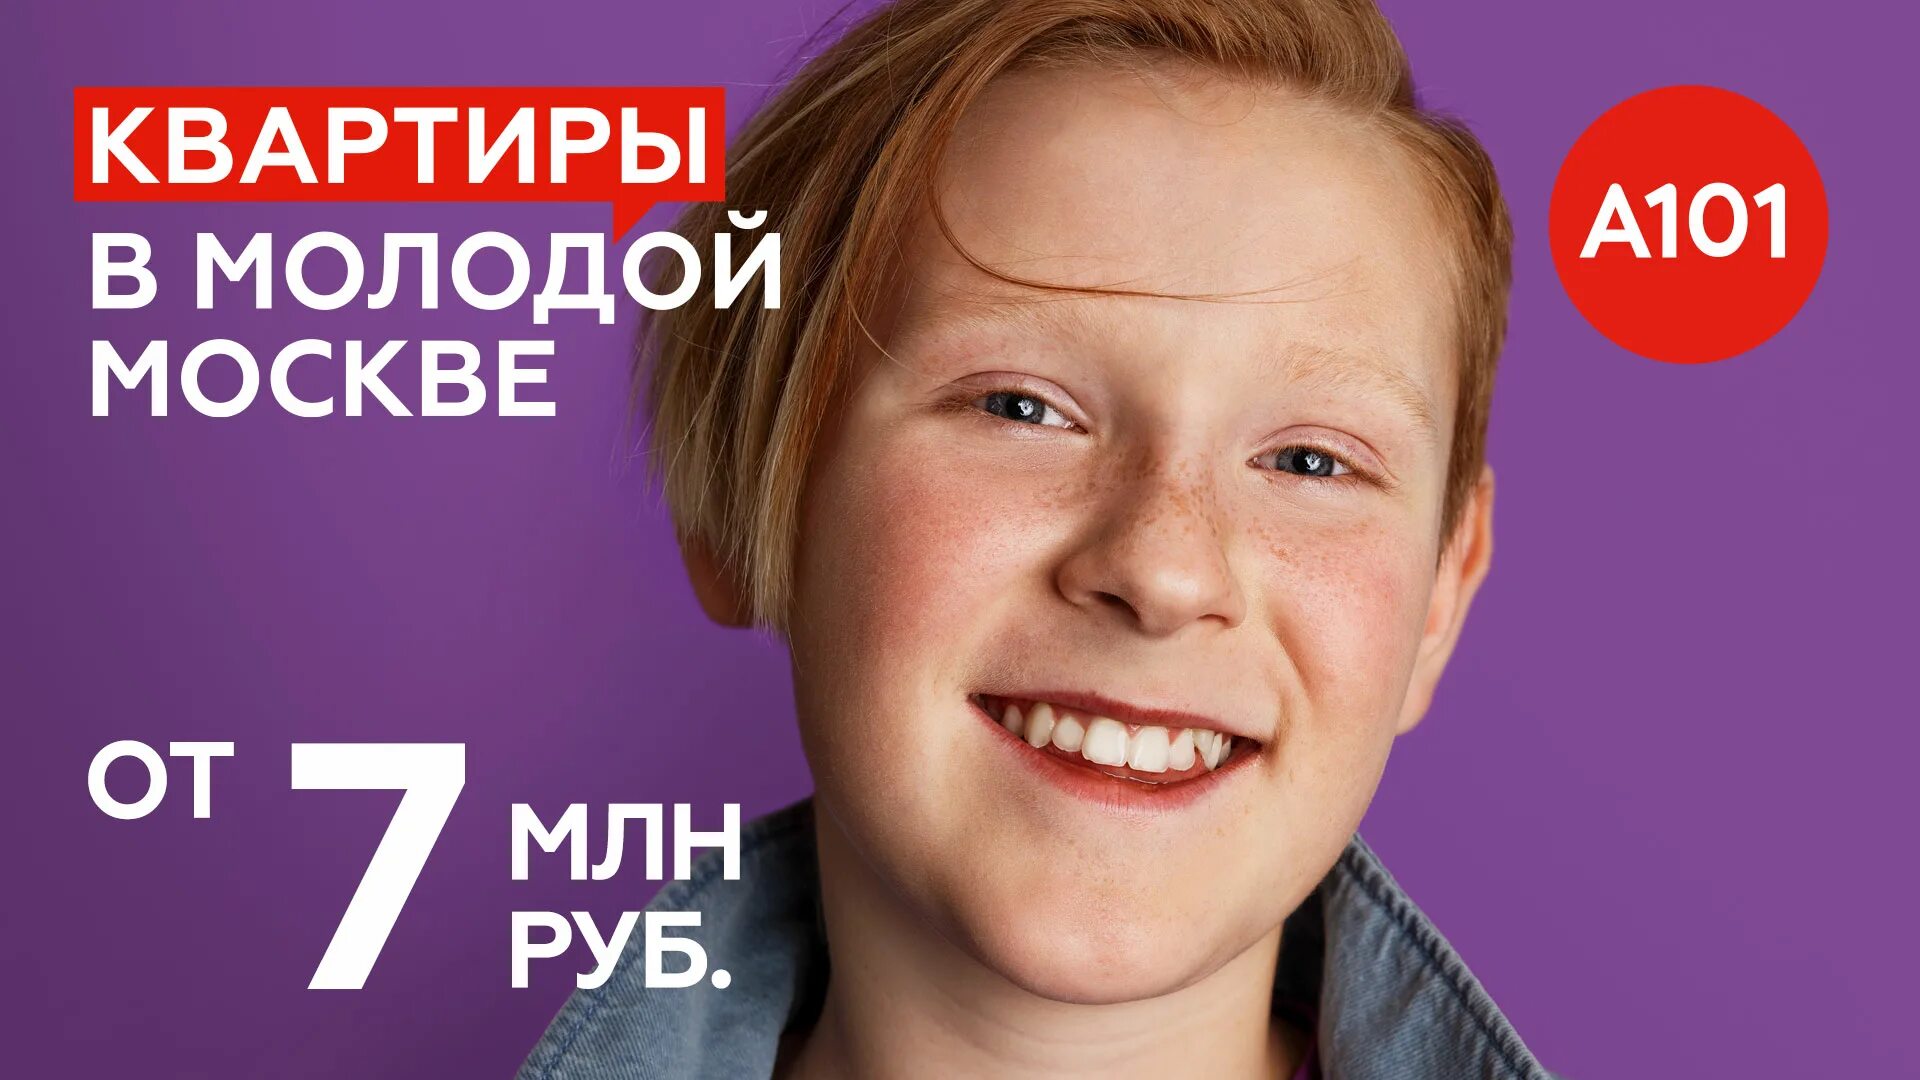 Ипотека в москве под 0.1 процент условия. Ипотека в молодой Москве а101. А101 реклама. Реклама а101 парень.